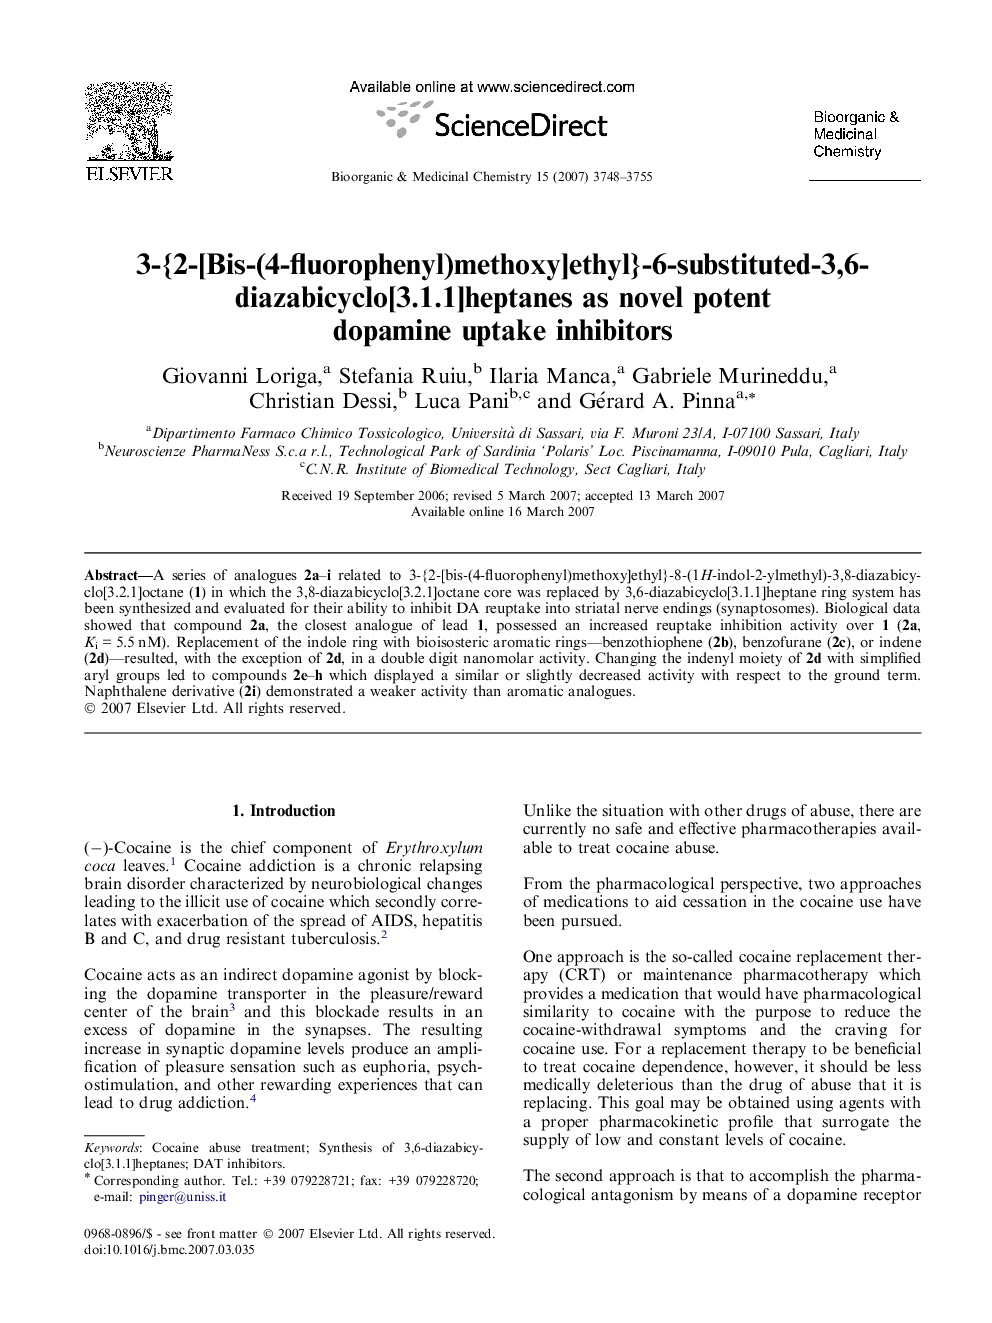 3-{2-[Bis-(4-fluorophenyl)methoxy]ethyl}-6-substituted-3,6-diazabicyclo[3.1.1]heptanes as novel potent dopamine uptake inhibitors